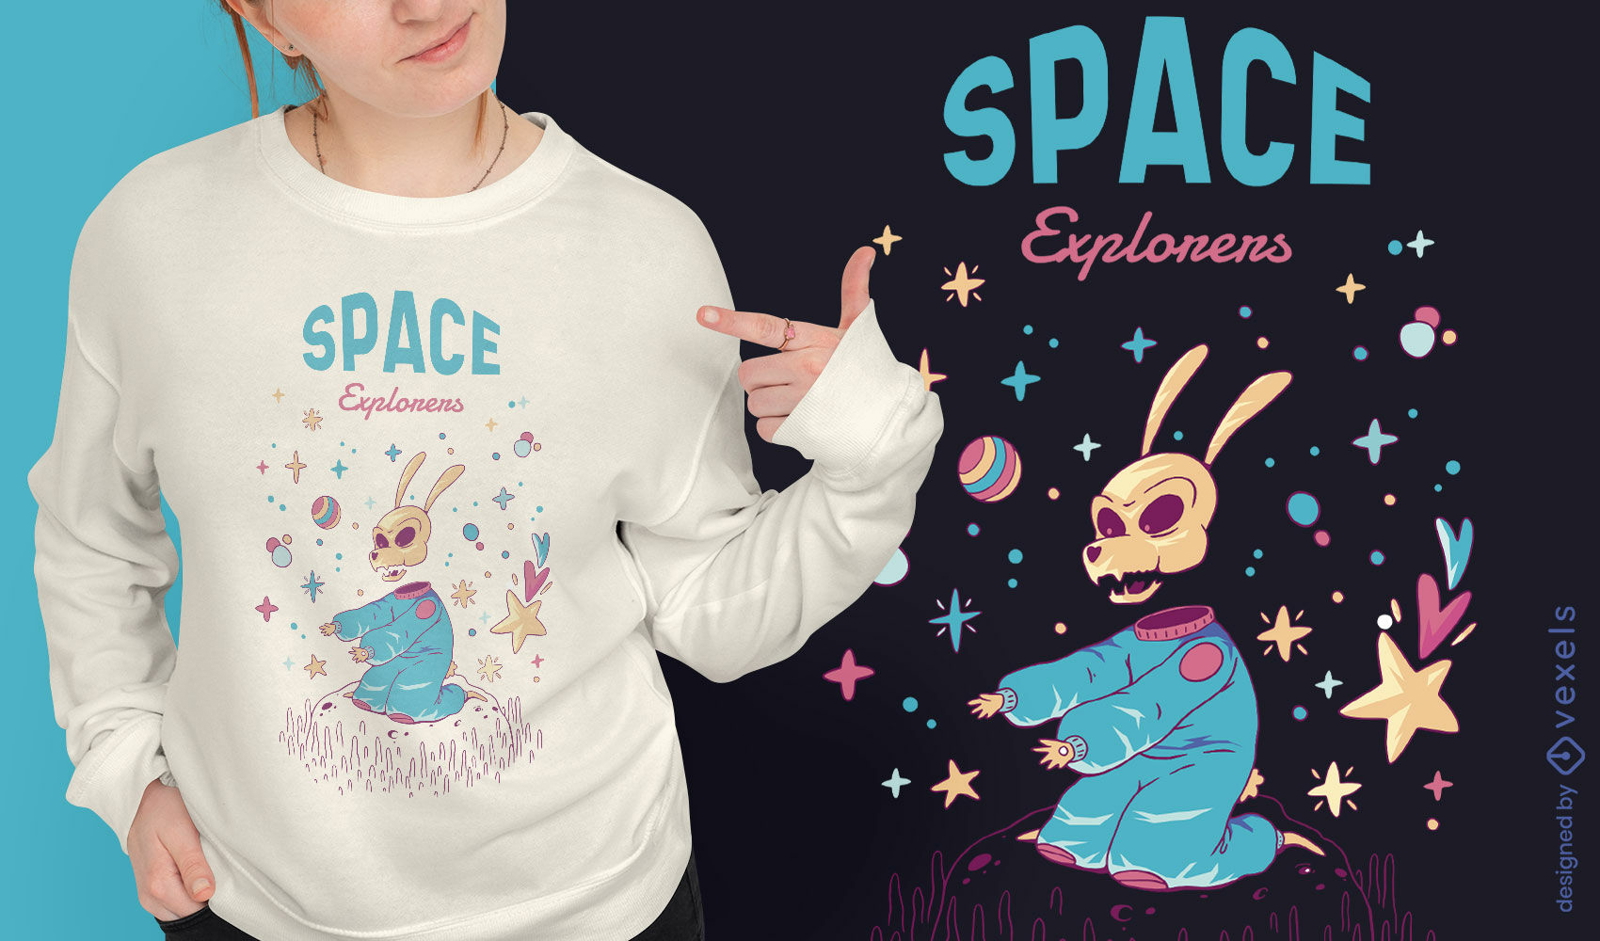 Dise?o de camiseta de conejo esqueleto de exploradores espaciales